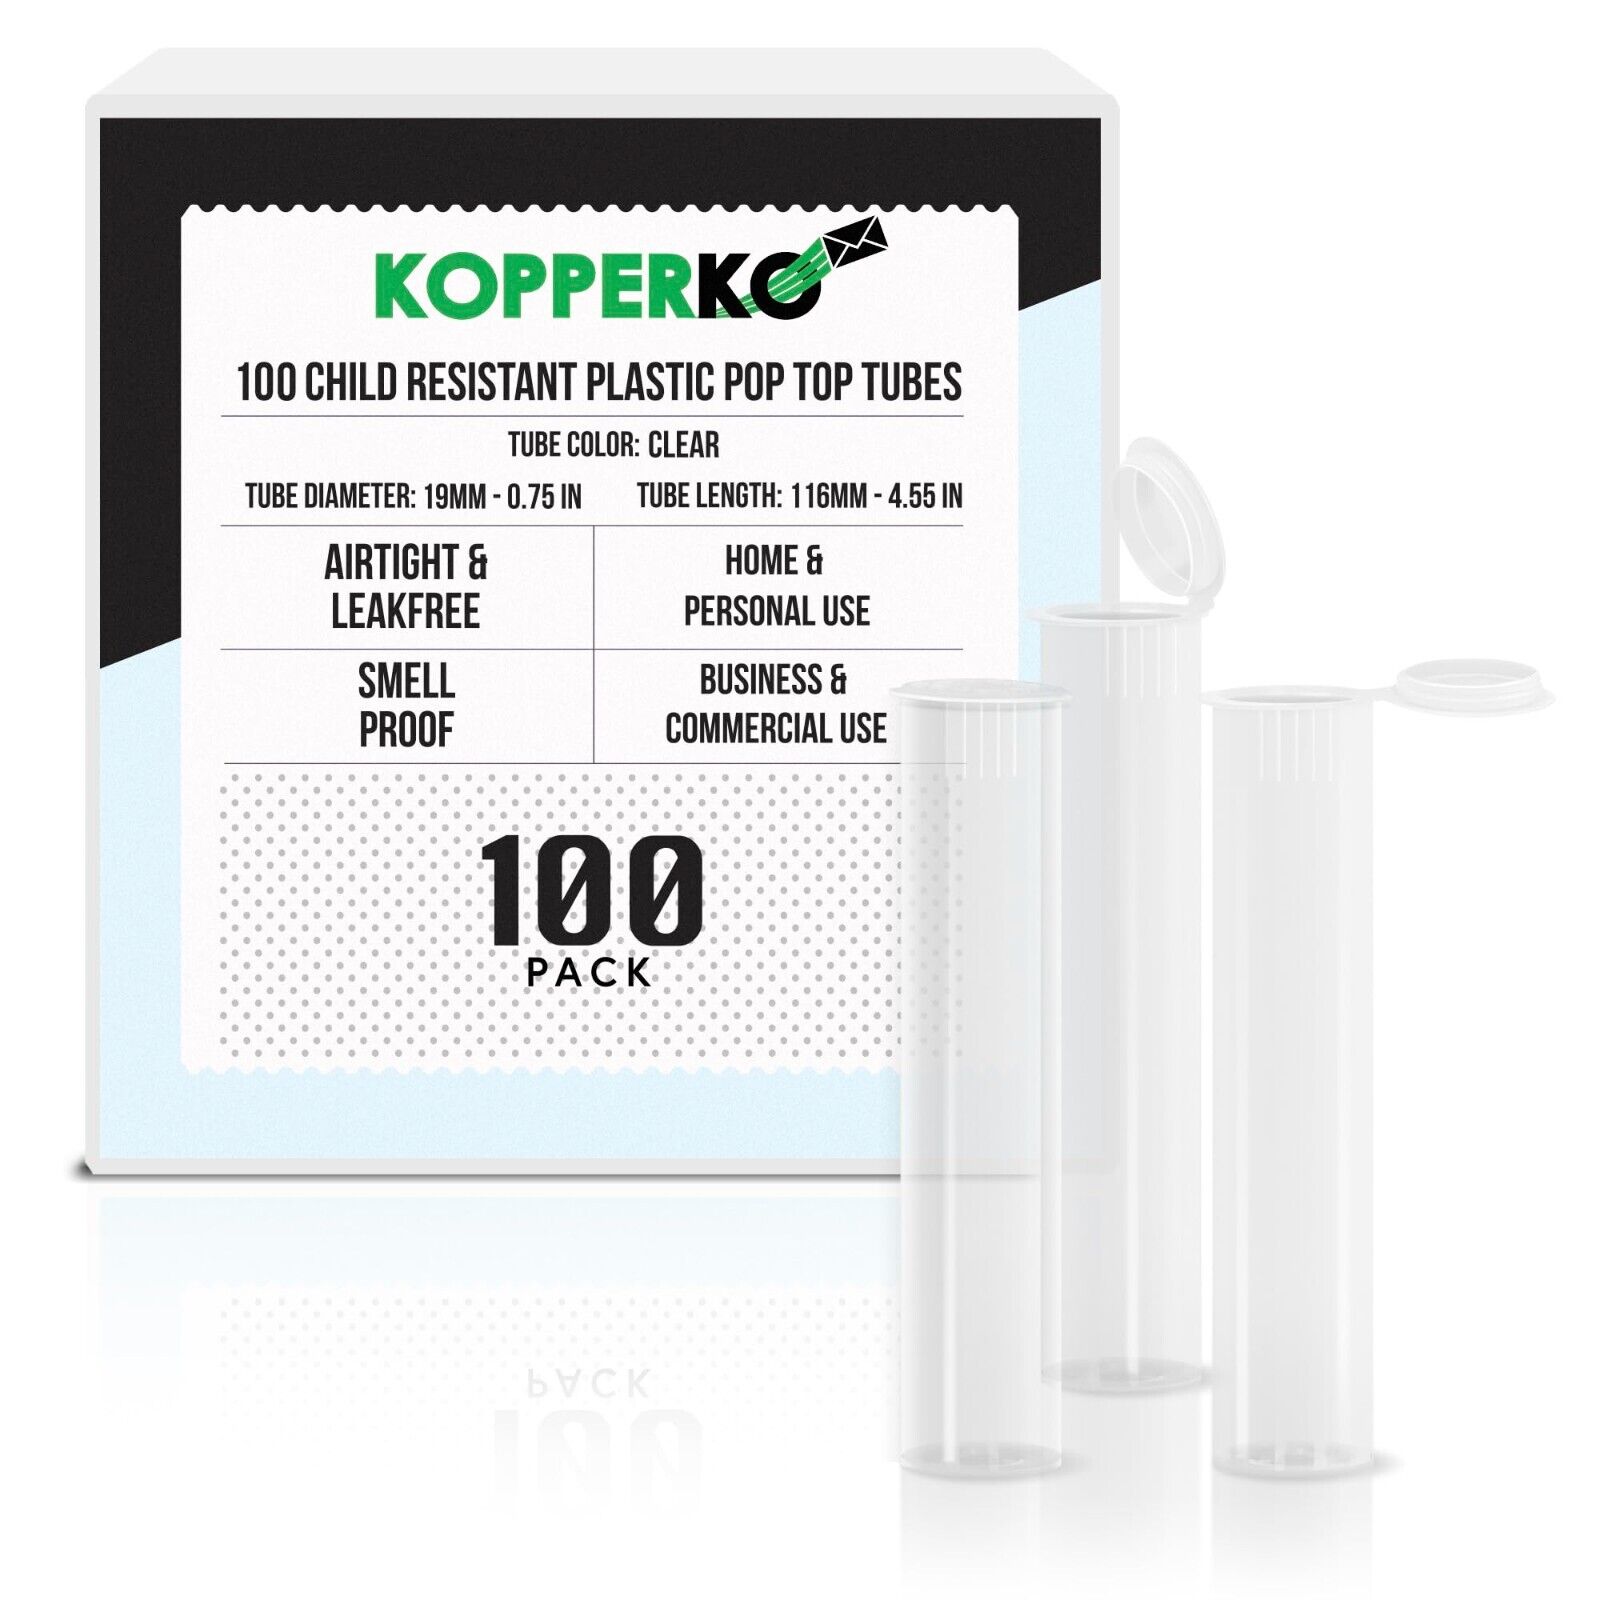 Kopperko 100 Pack 116mm Plastic Pop Top Tube - Child Resistant - Clear